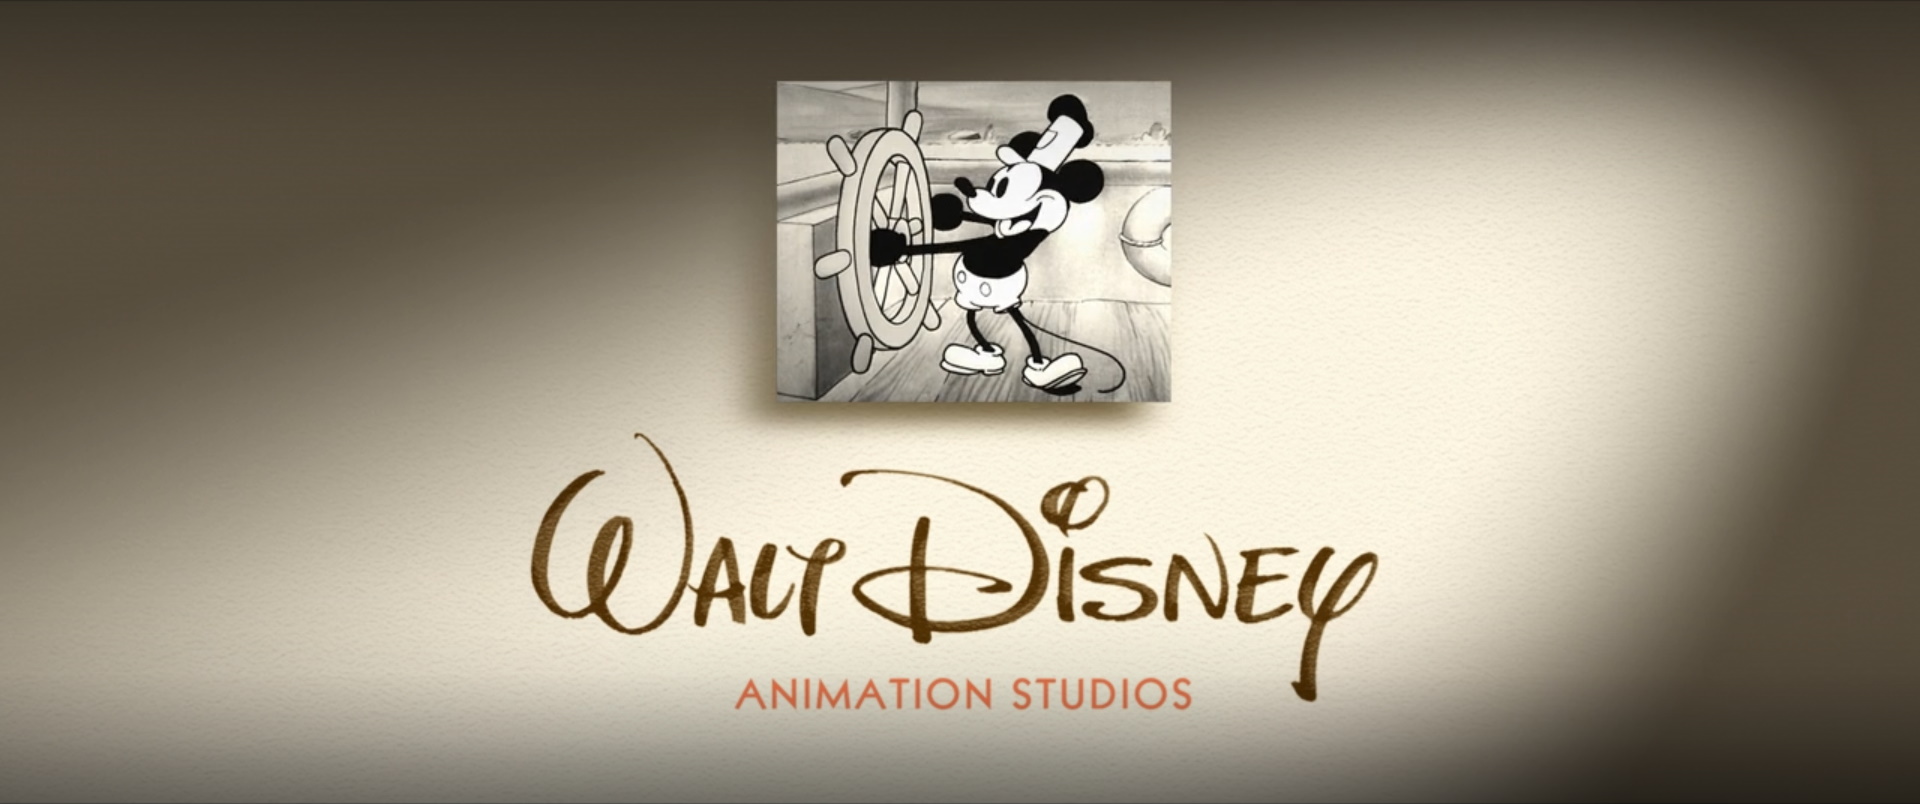 Alle Walt Disney Animation Studios Filme